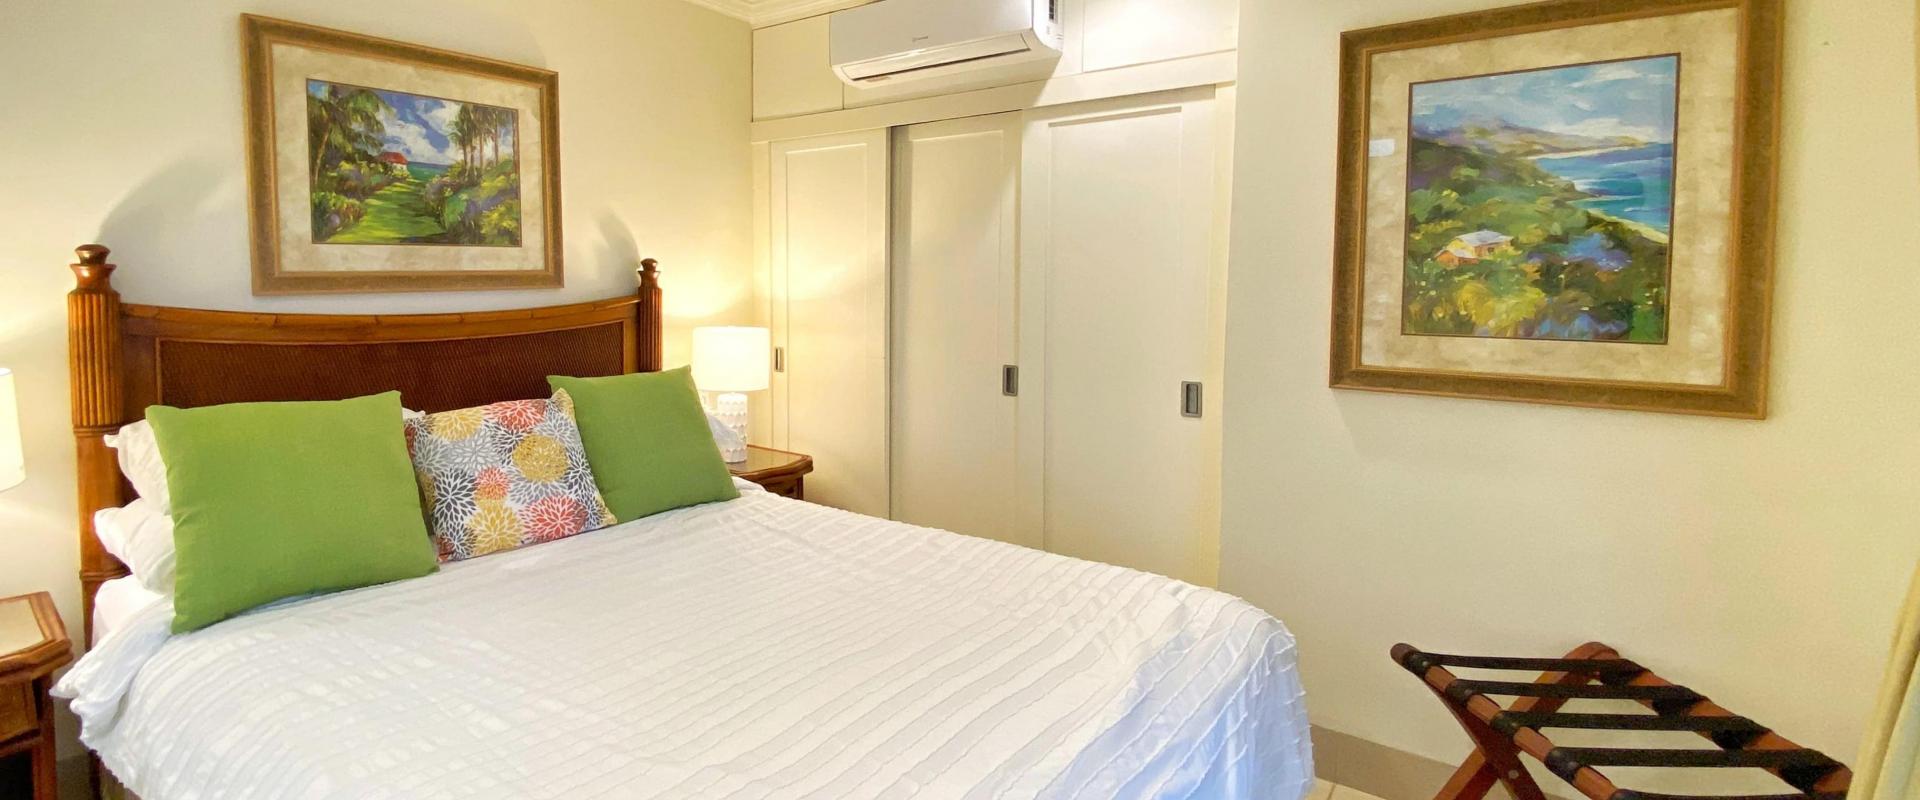 Palm Beach 211 Barbados Beachfront Vacation Condo Rental Bedroom 3 With Queen Bed